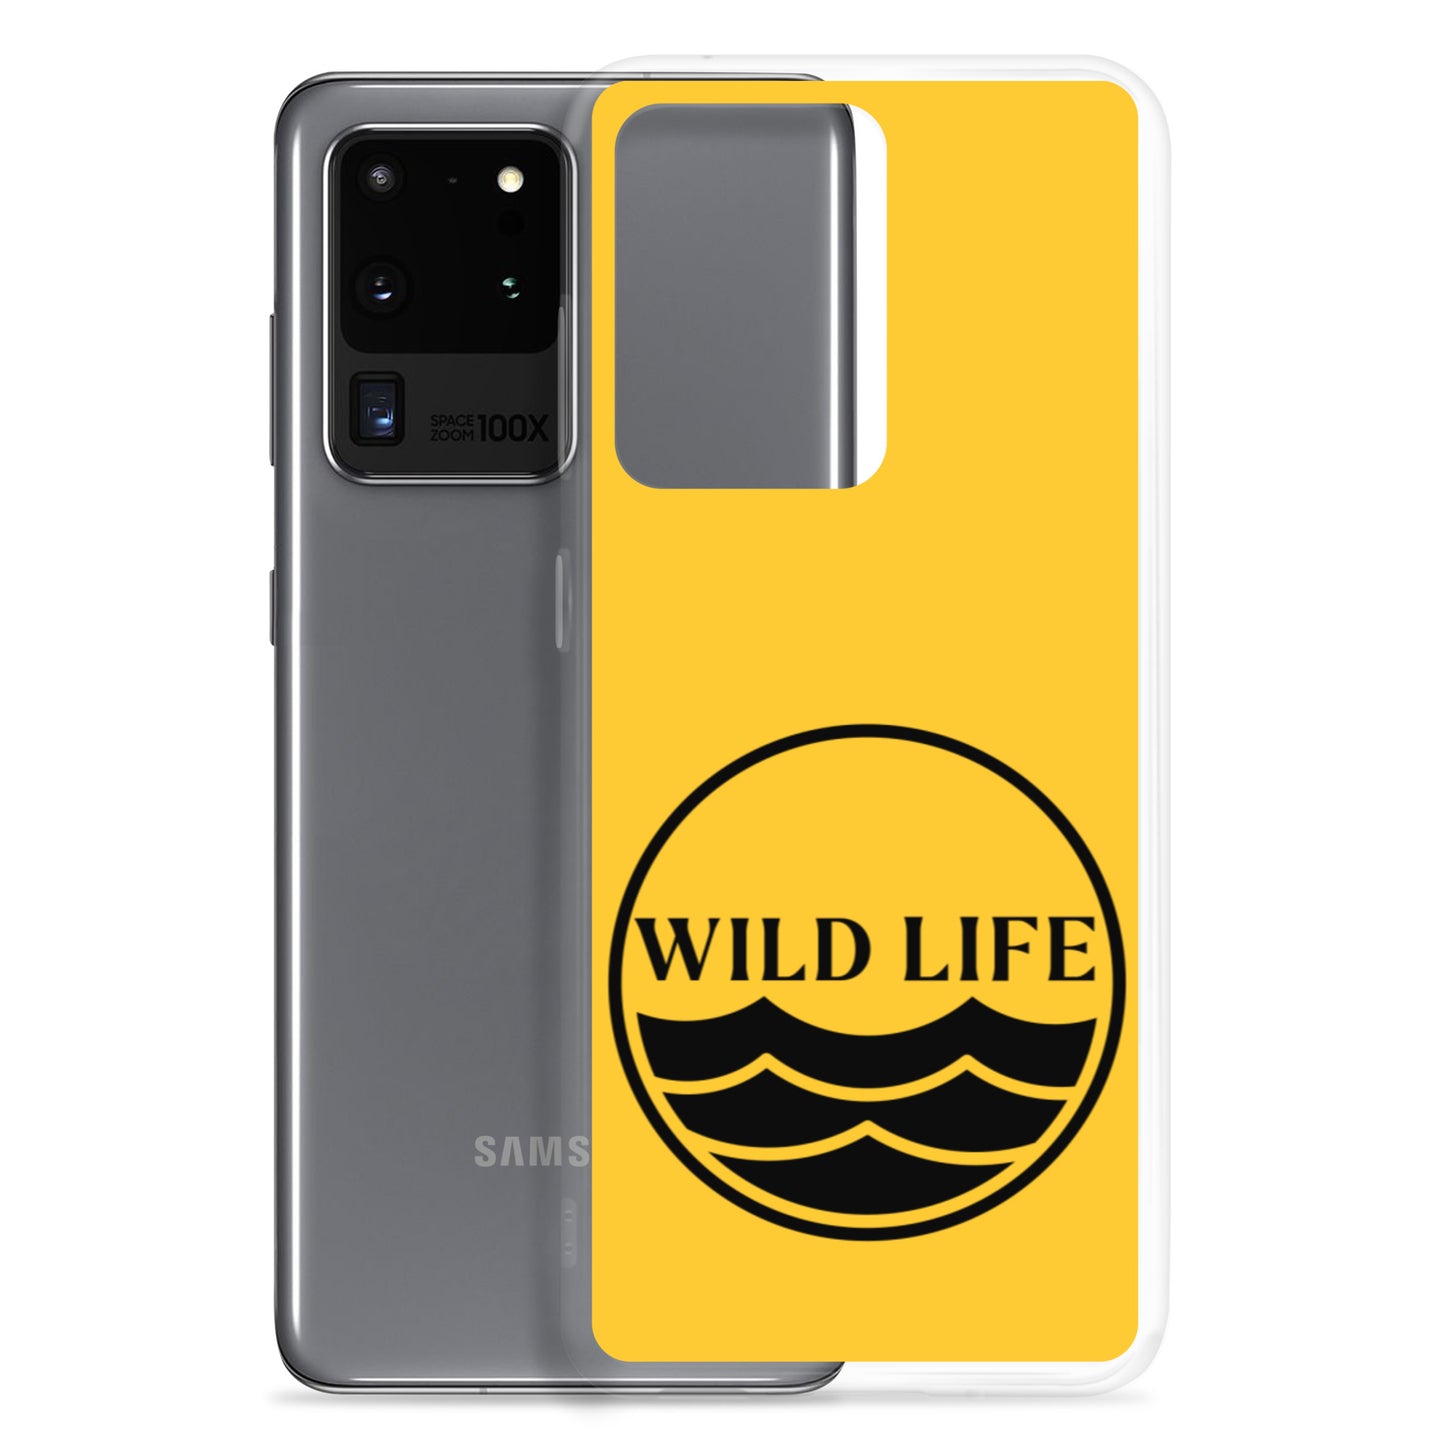 WILD LIFE Samsung Case - Yellow